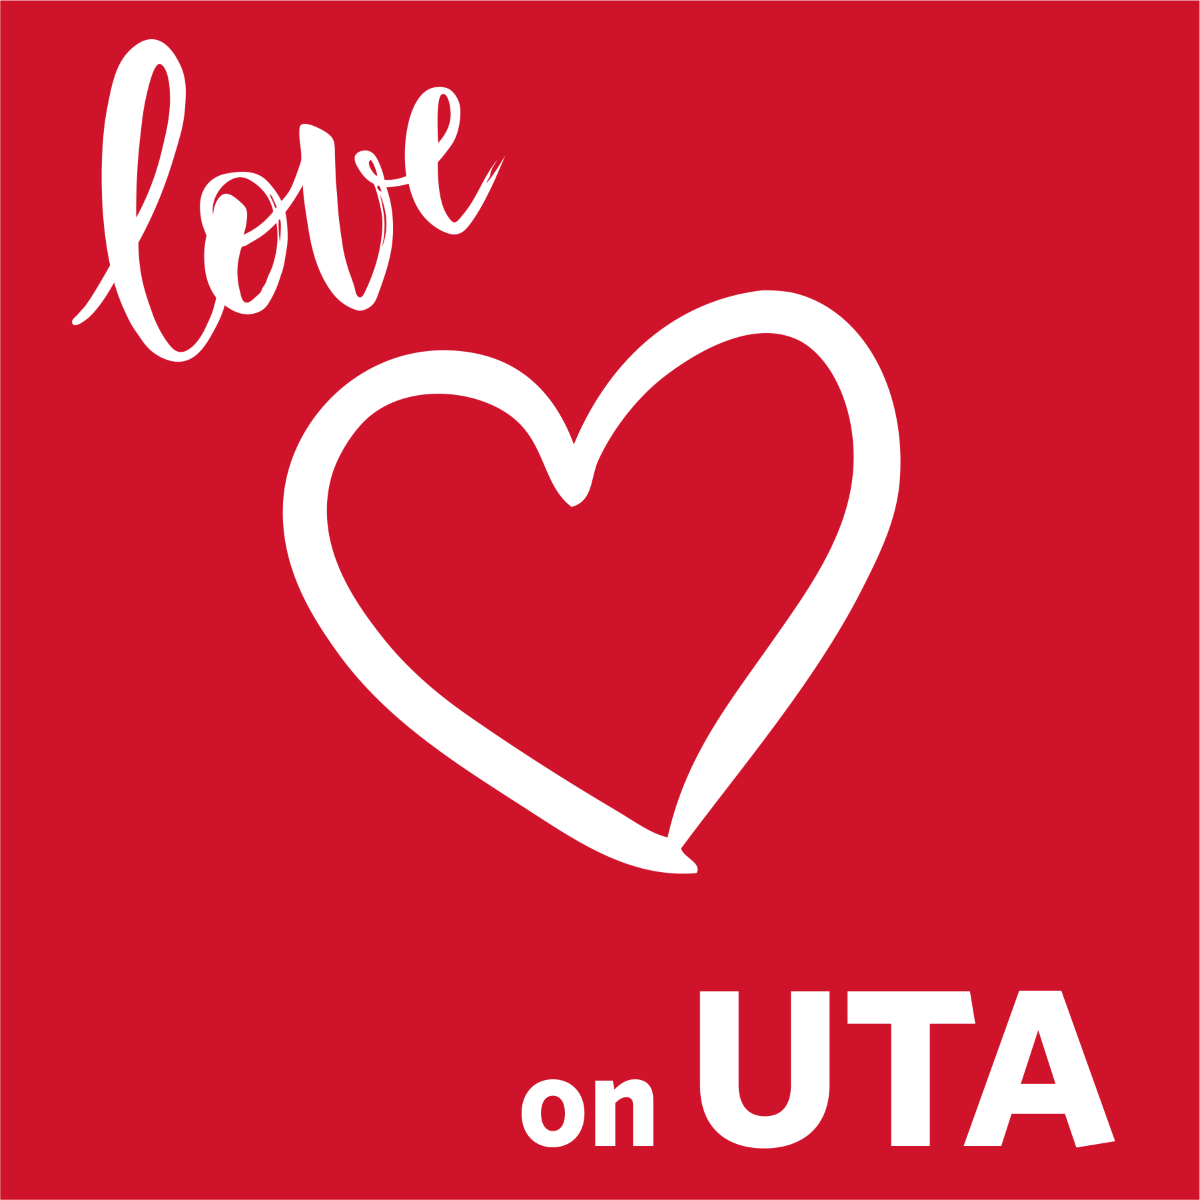 Love on UTA graphic